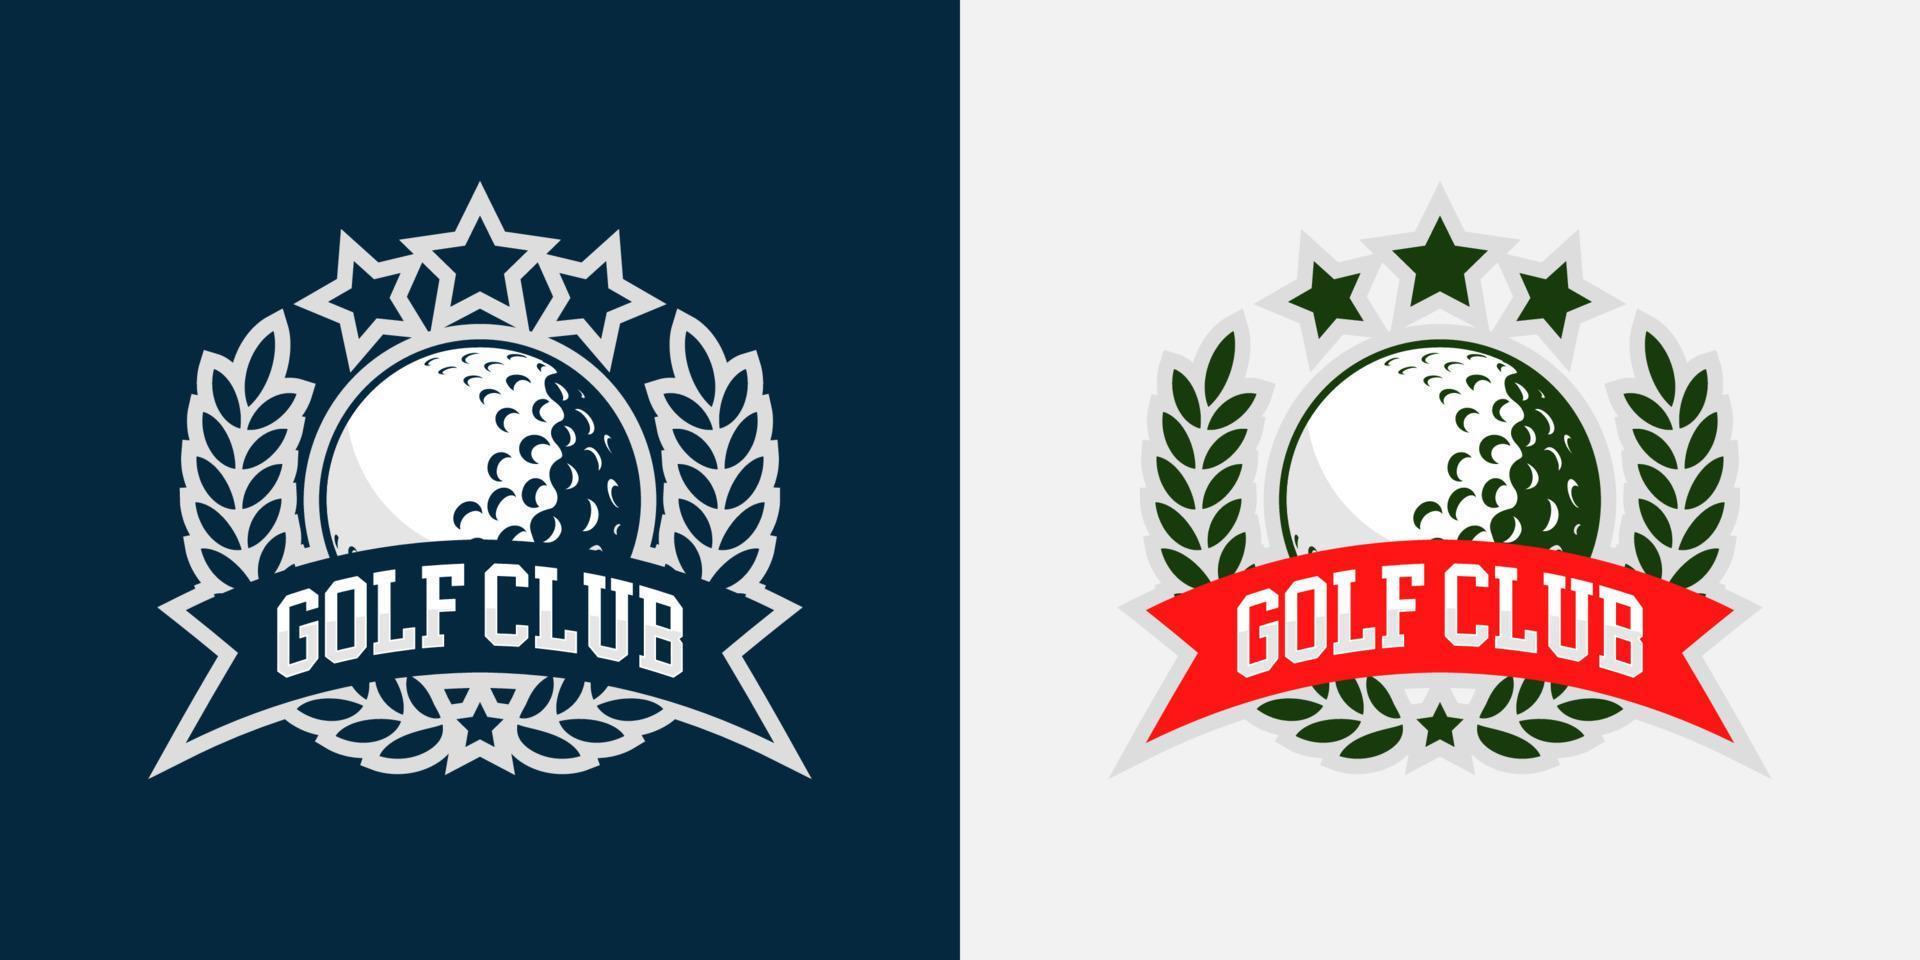 Golf logotype template. Modern logo and symbol of sport. Vintage and modern concept. Fit for apparel, brand, logo, symbol, banner, badge, emblem. High detail logo. Vector eps 10